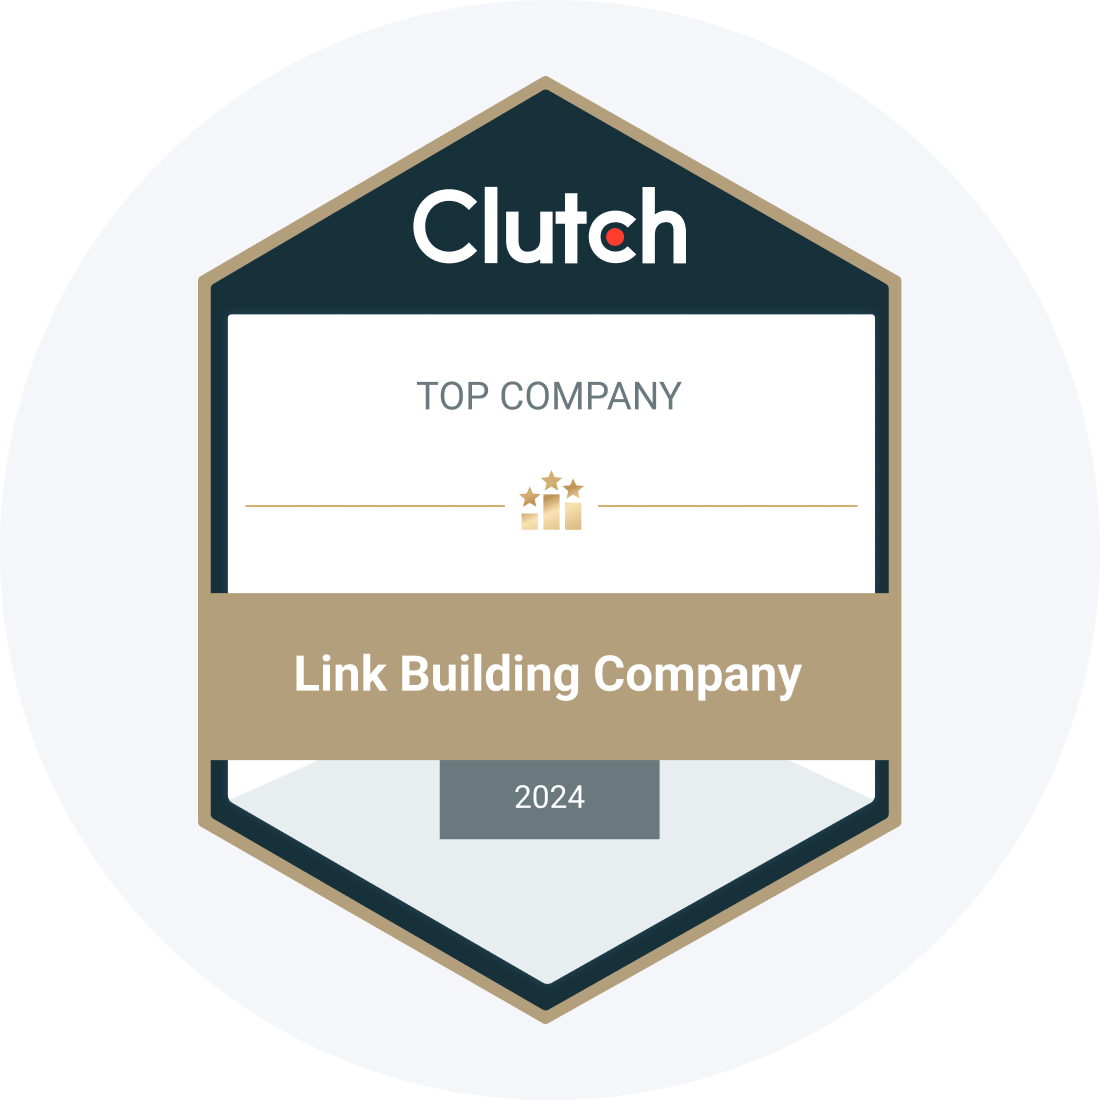 clutch_top_link_building_company_2004